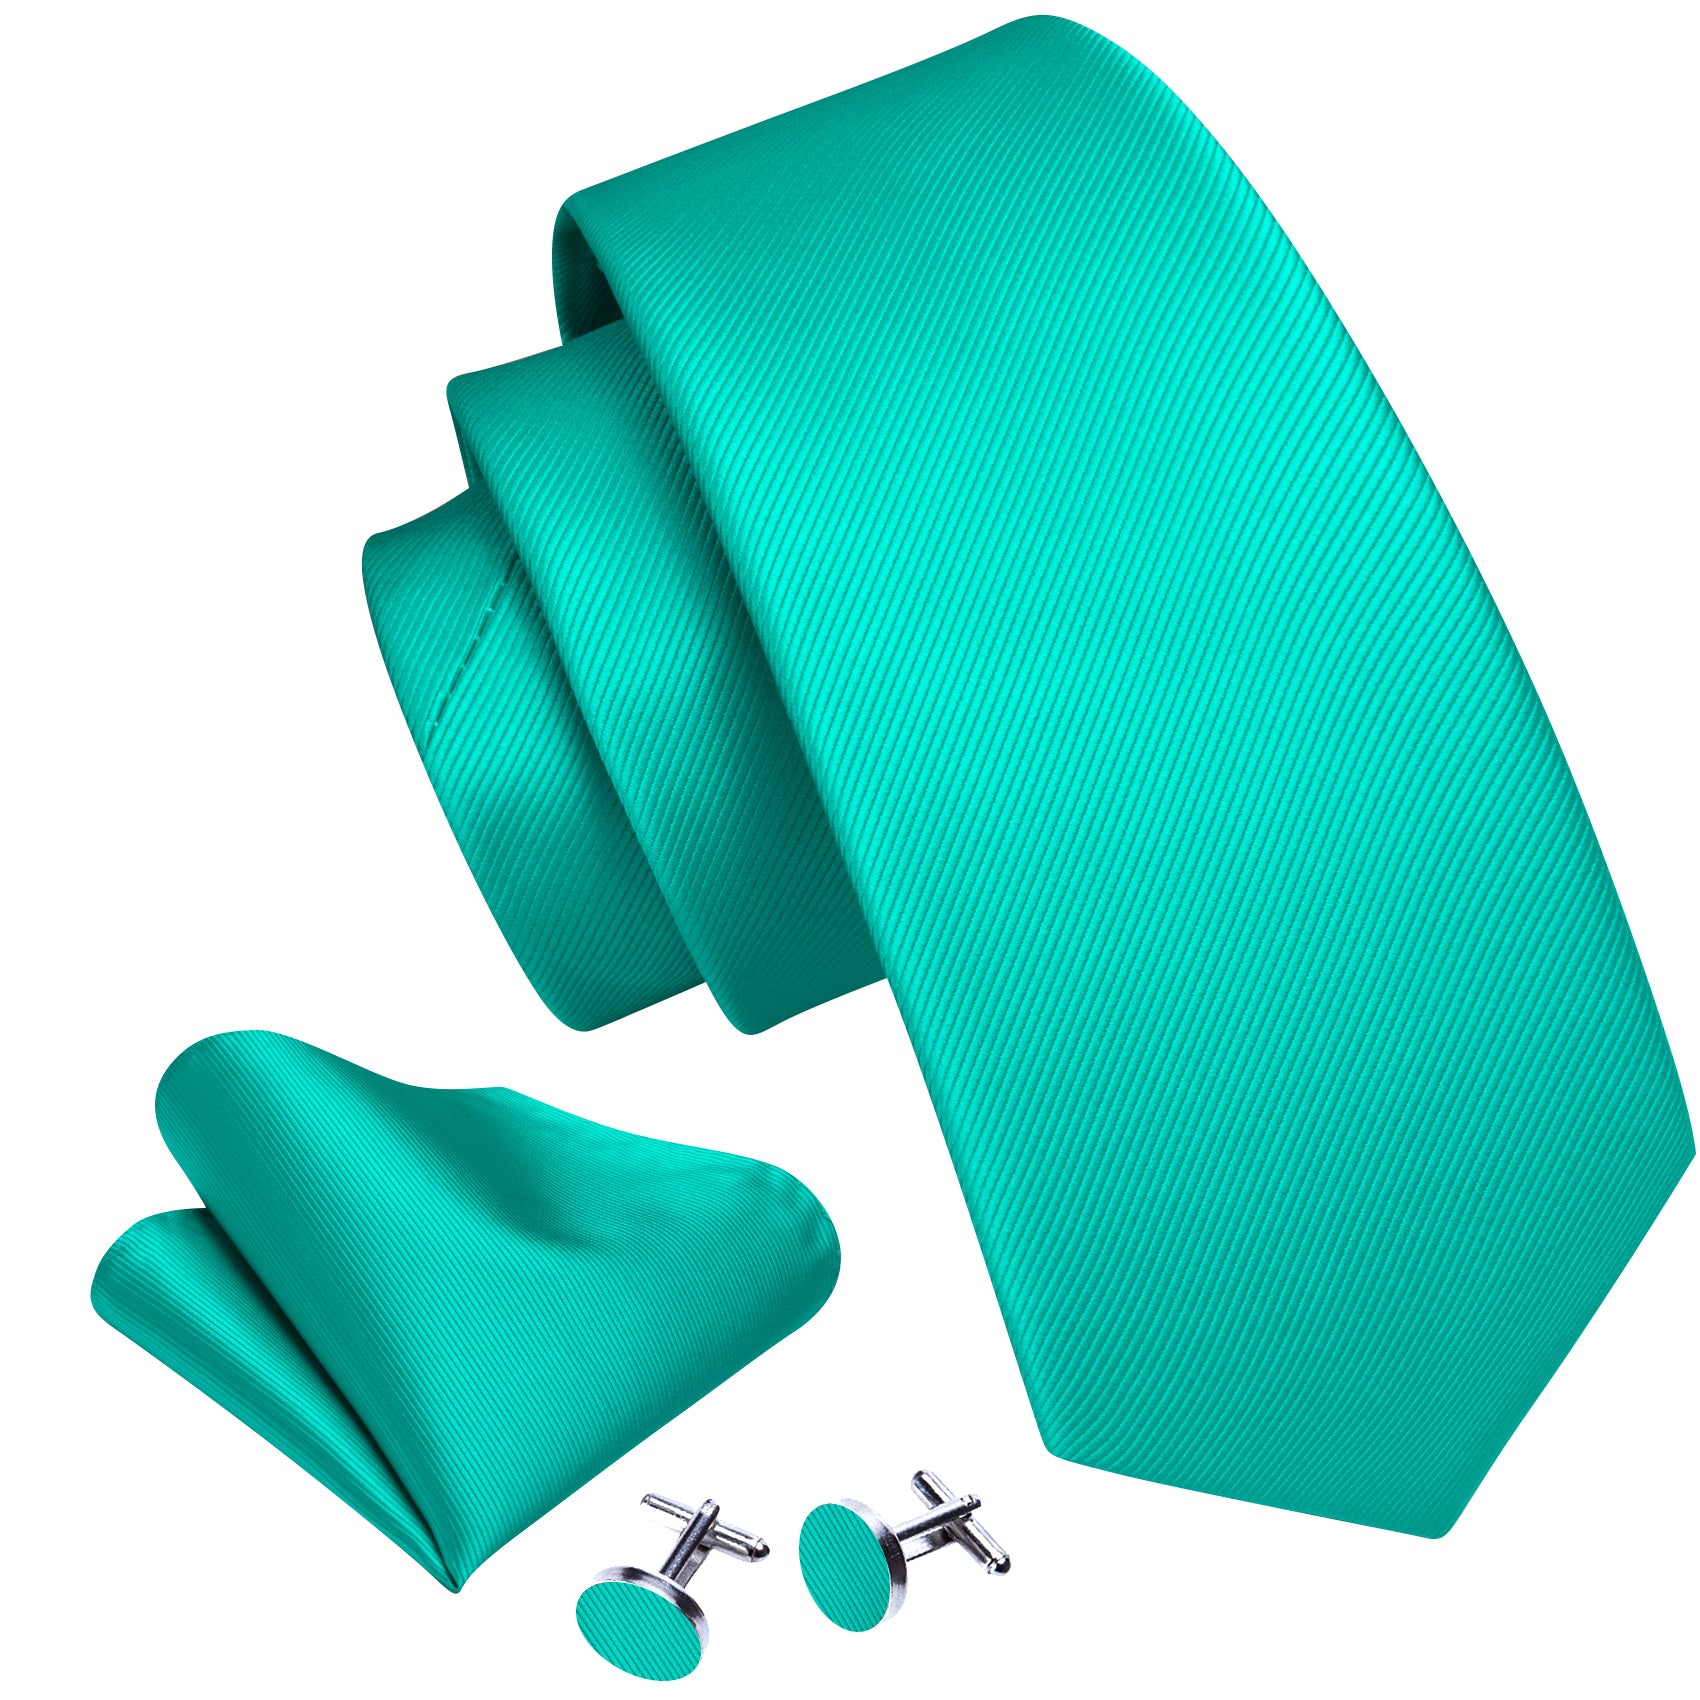 Aqua Solid Silk Tie Pocket Square Cufflinks Set